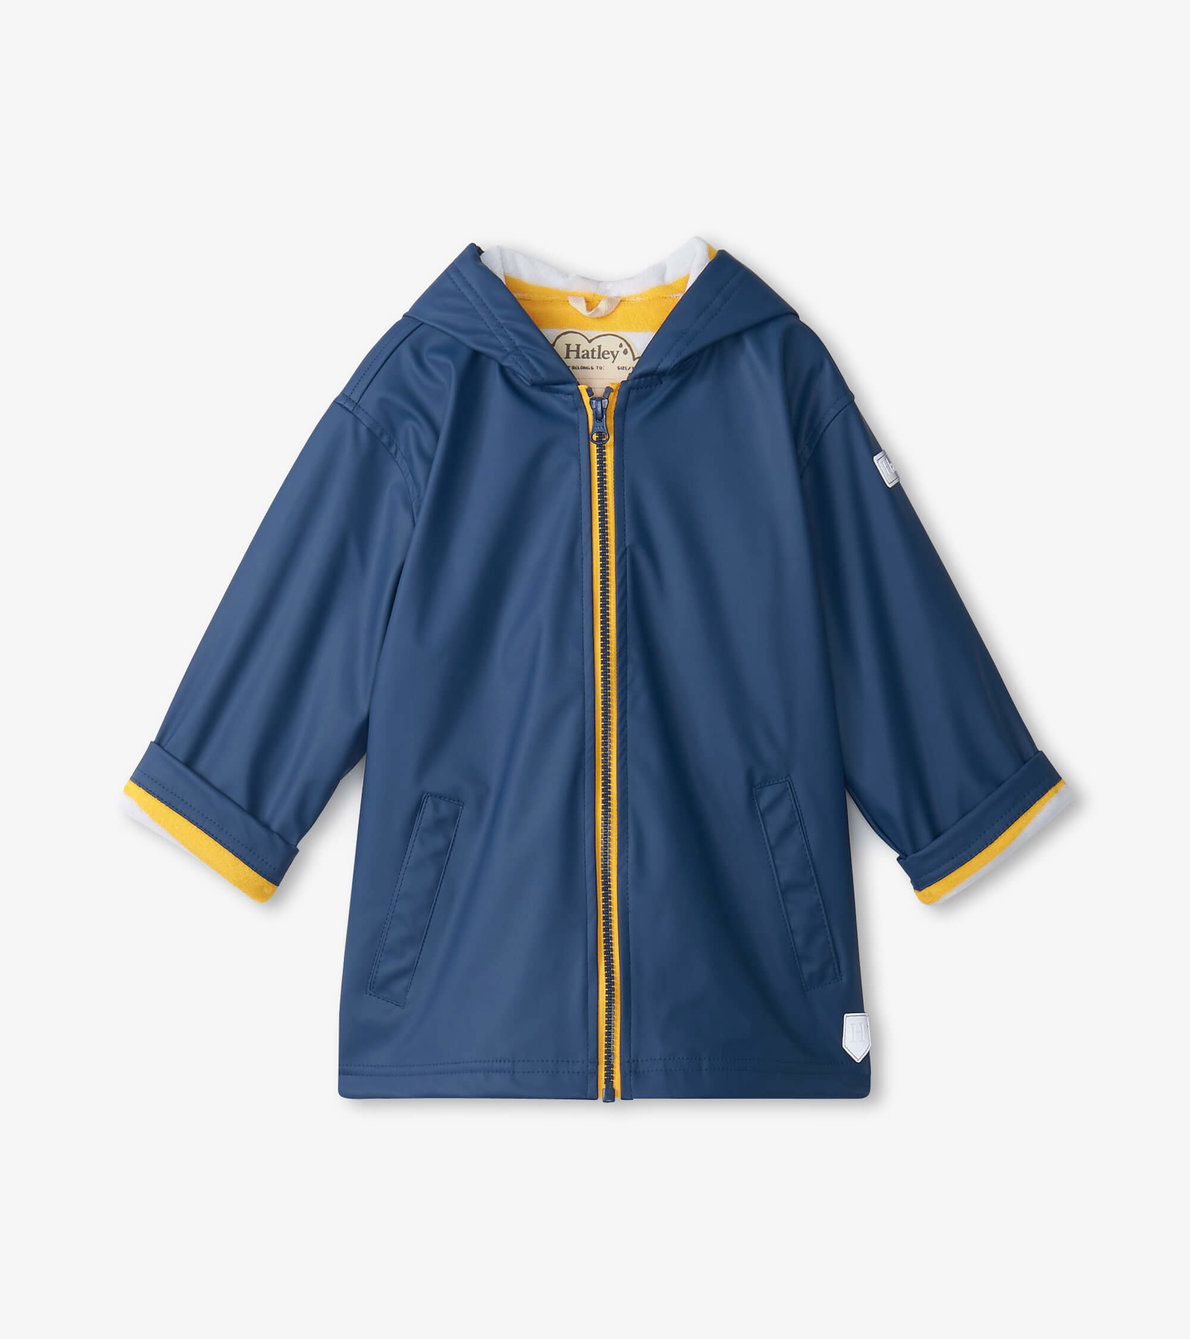 View larger image of Navy & Yellow Kids Rain Jacket